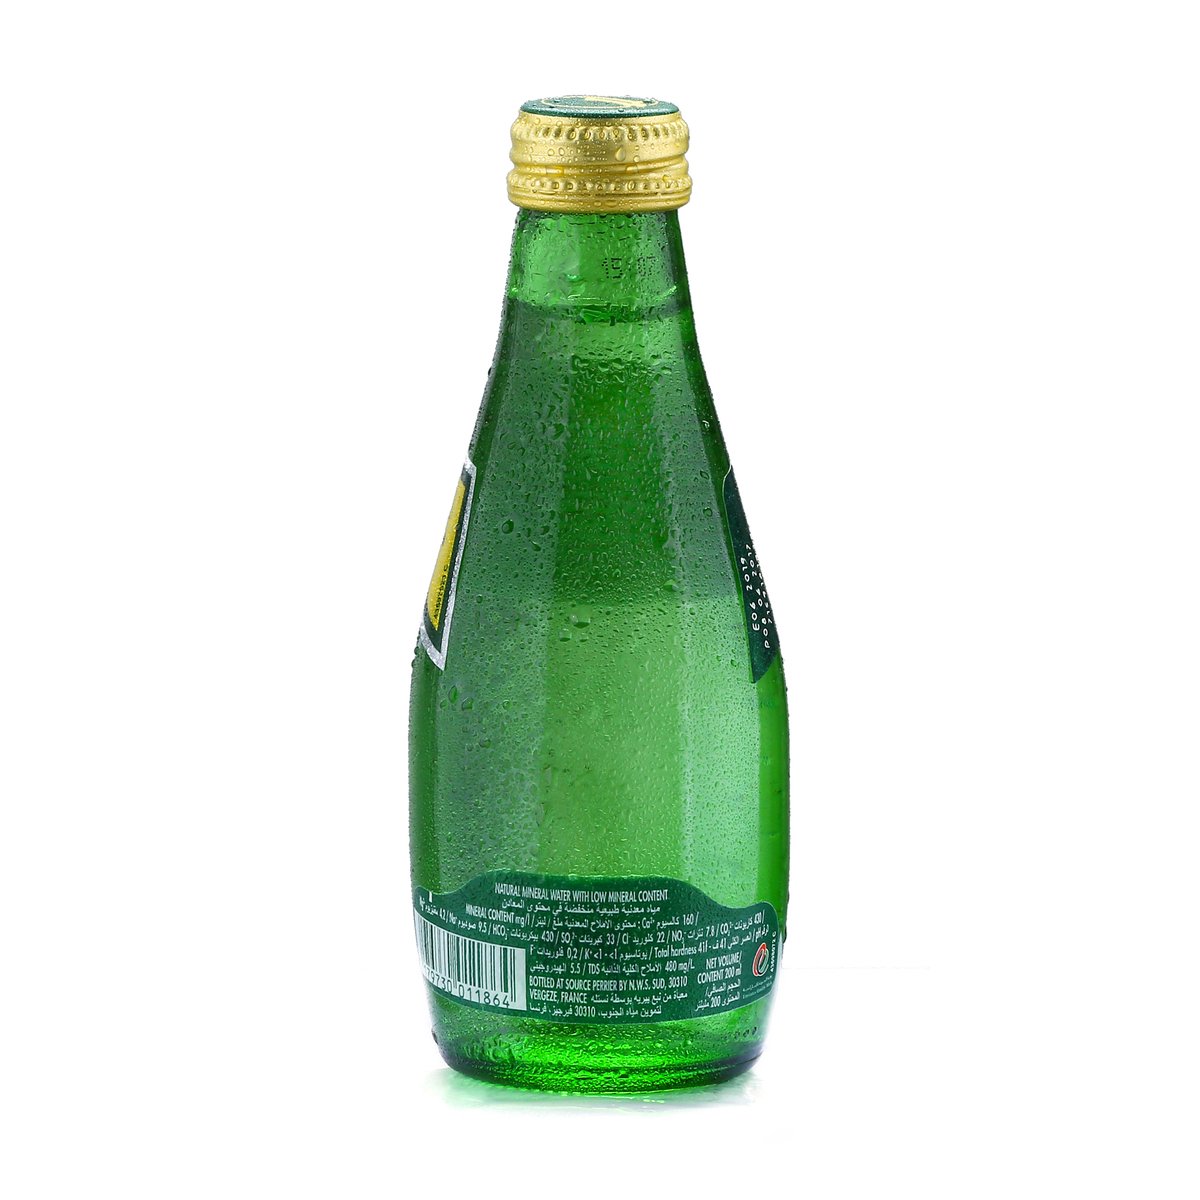 Perrier Natural Sparkling Mineral Water Regular 200ml